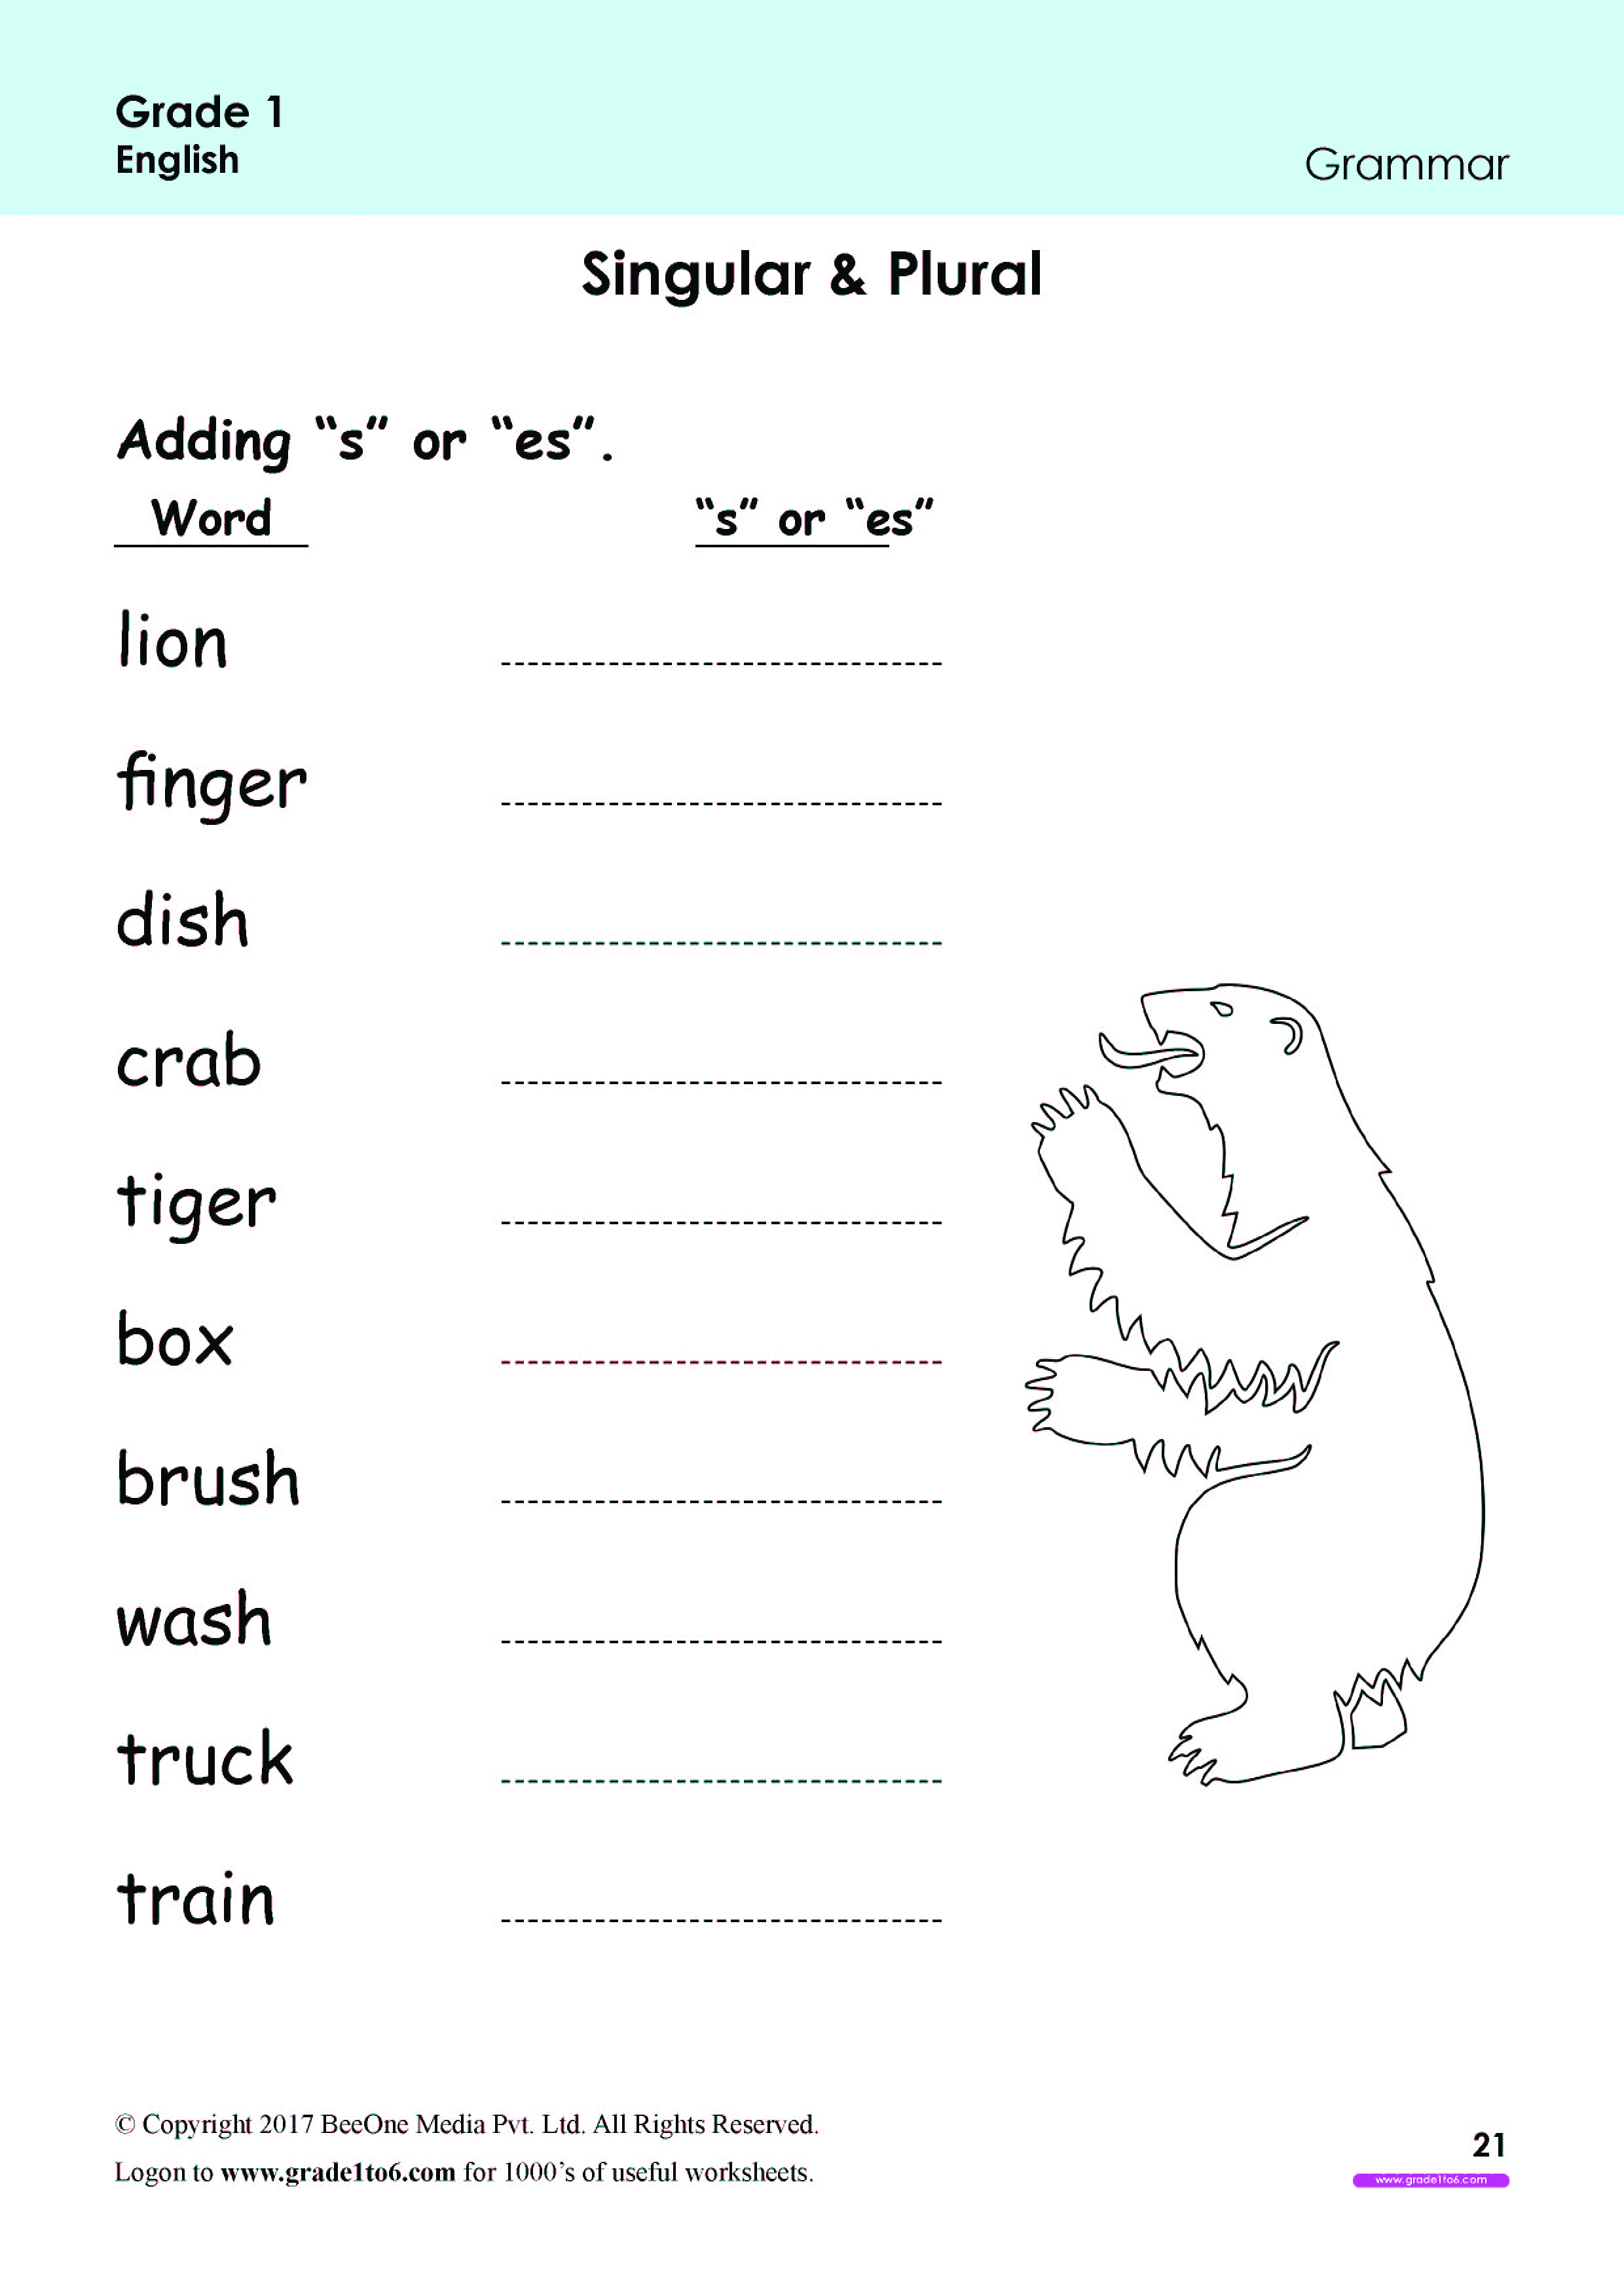 singular plural worksheets for grade 1 www grade1to6 com